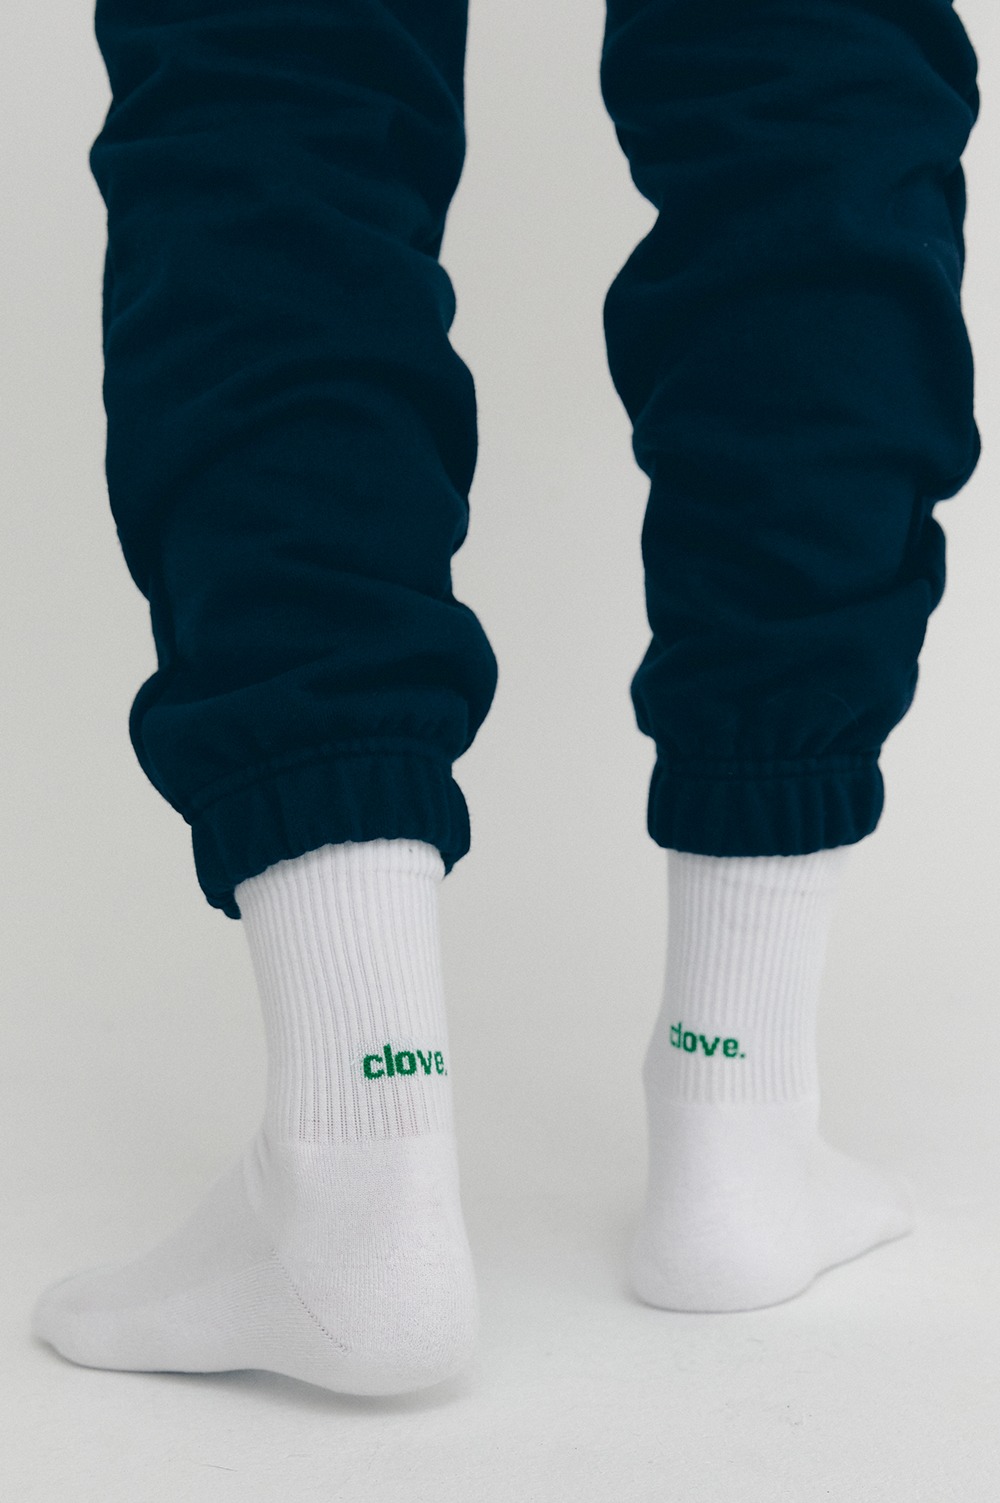 clove - Clove Coolmax Socks Green (2pcs)